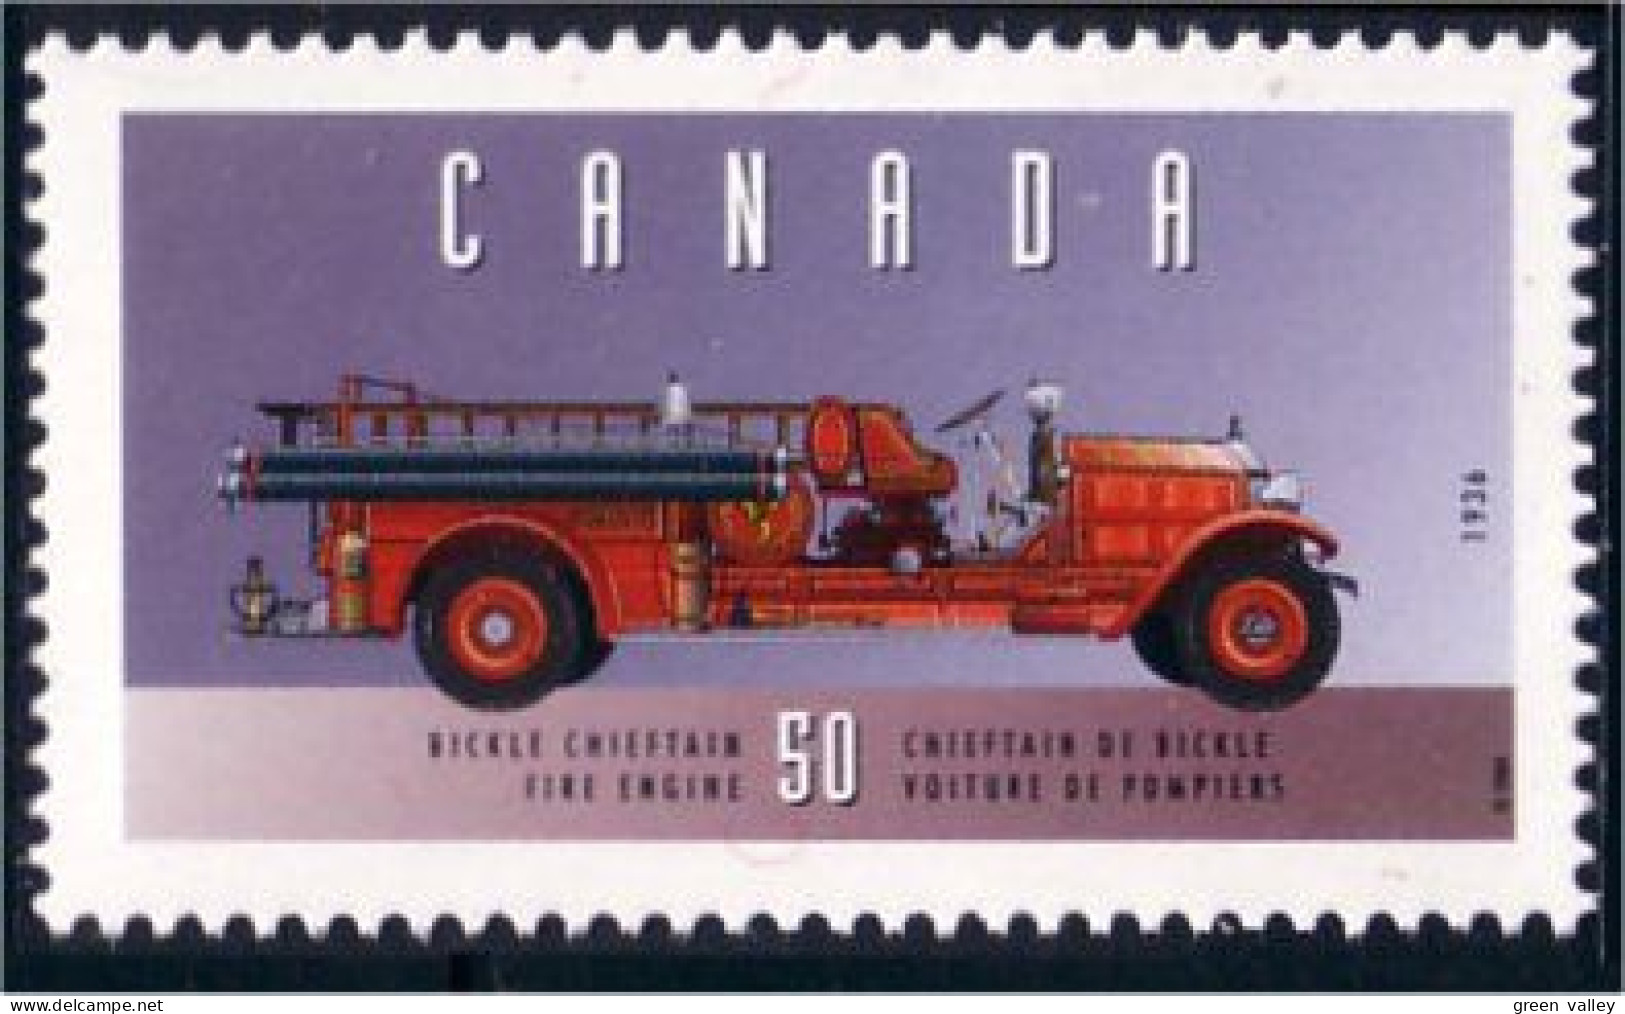 Canada Camion Pompier Bickle Chieftain Fire Engine MNH ** Neuf SC (C15-27dd) - LKW